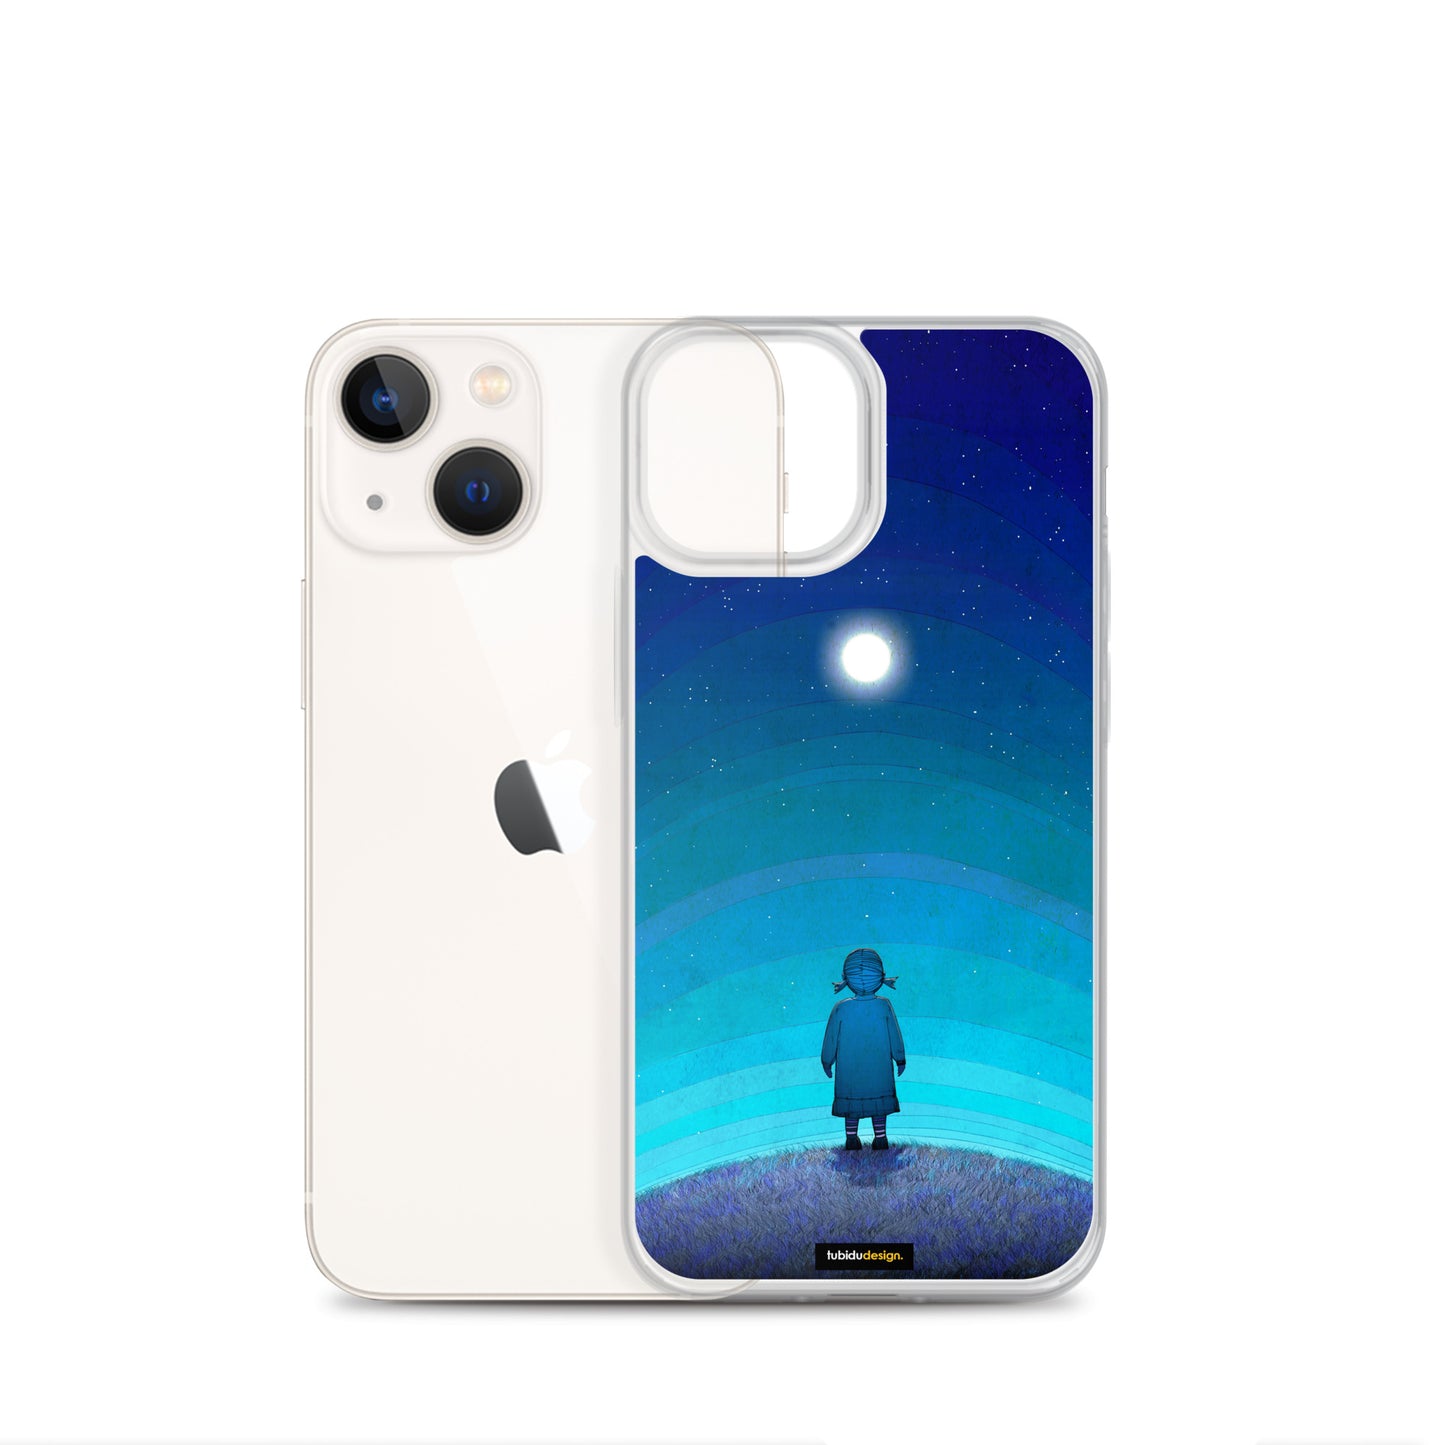 Moonlight - Illustrated iPhone Case